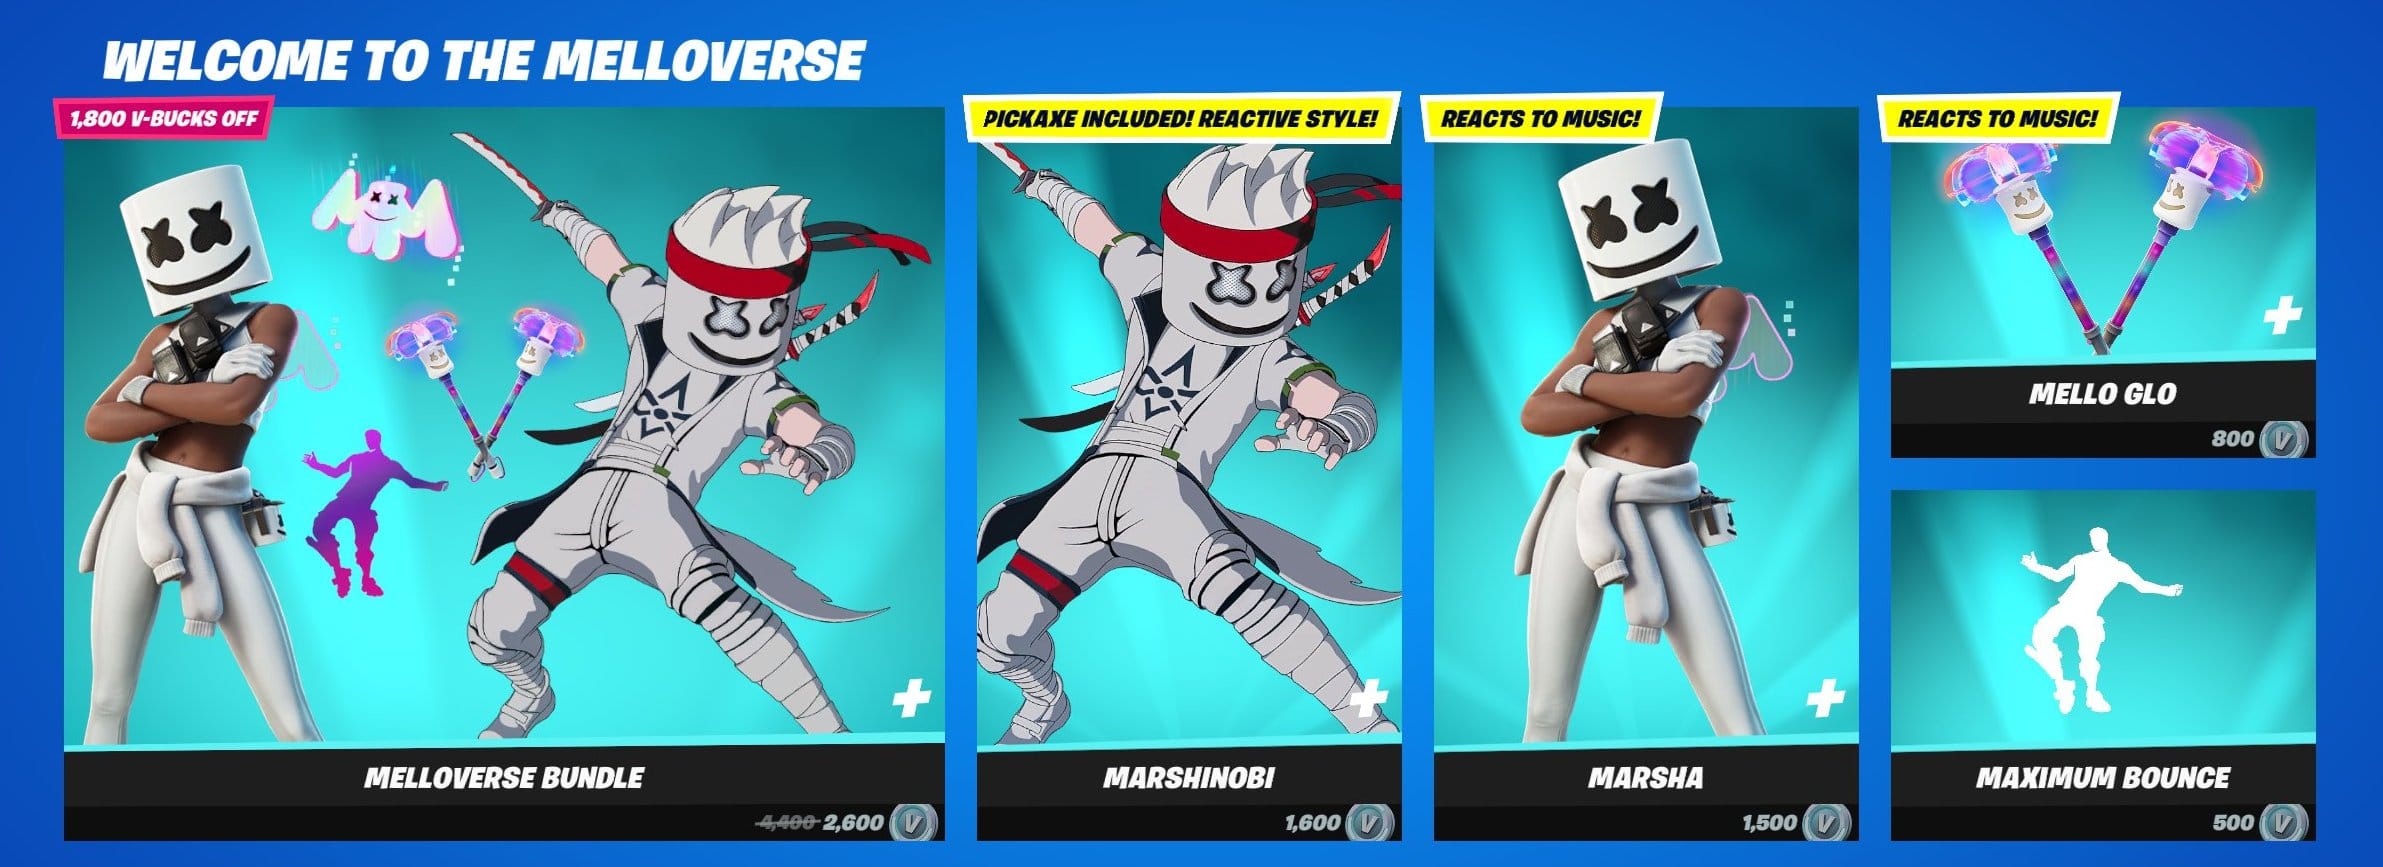 Marsha and Marshinobi outfits are joining Marshmello in Fortnite